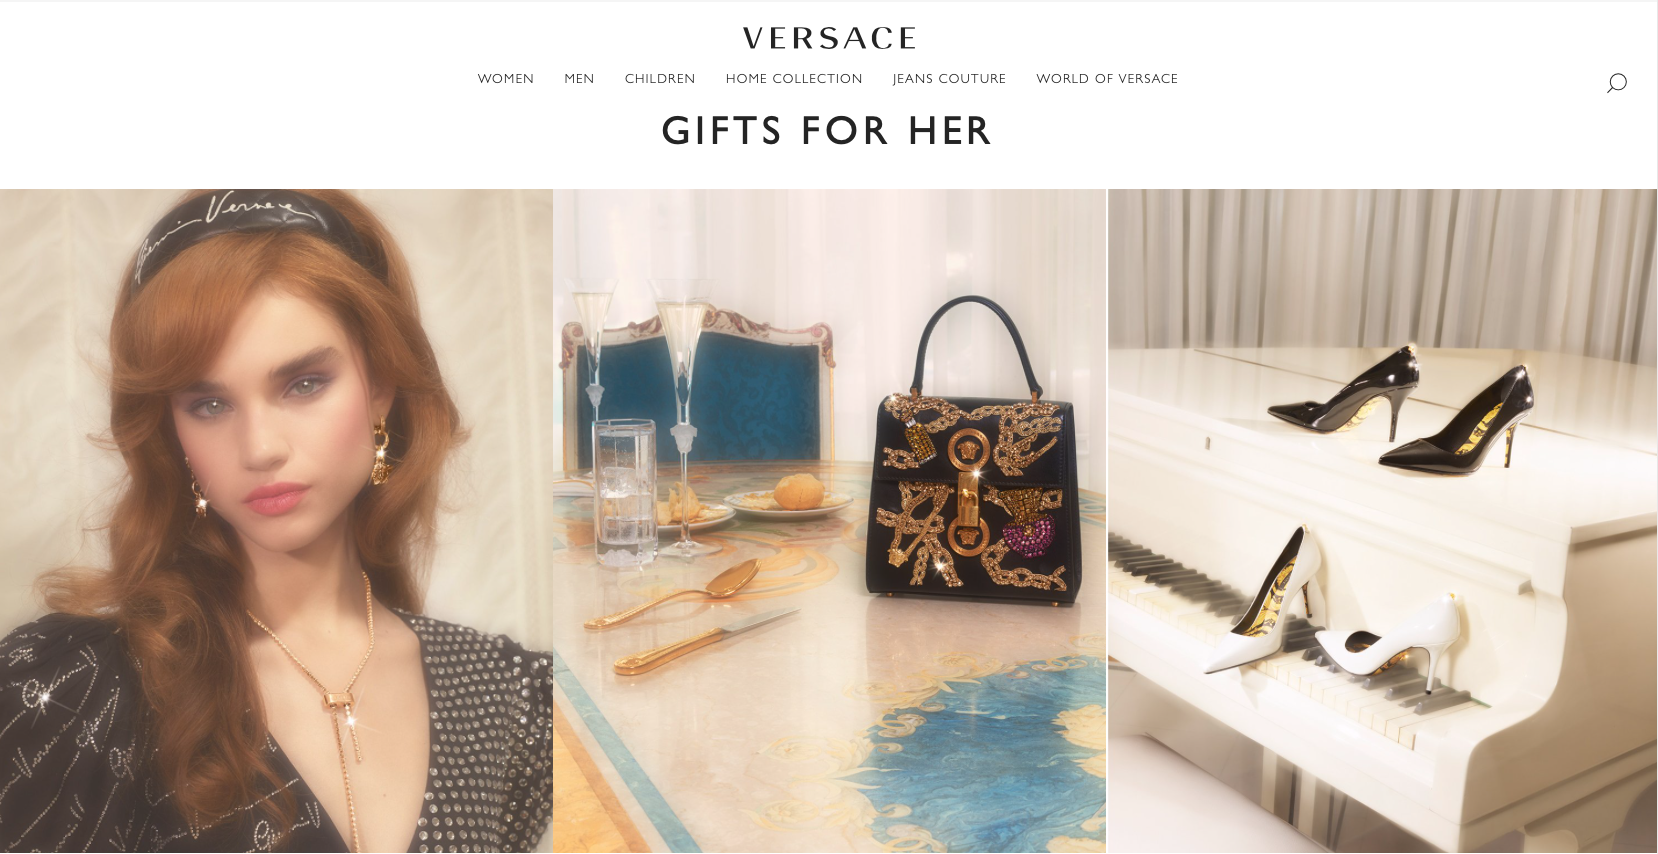 Versace 2019. aasta kampaania (versace.com)